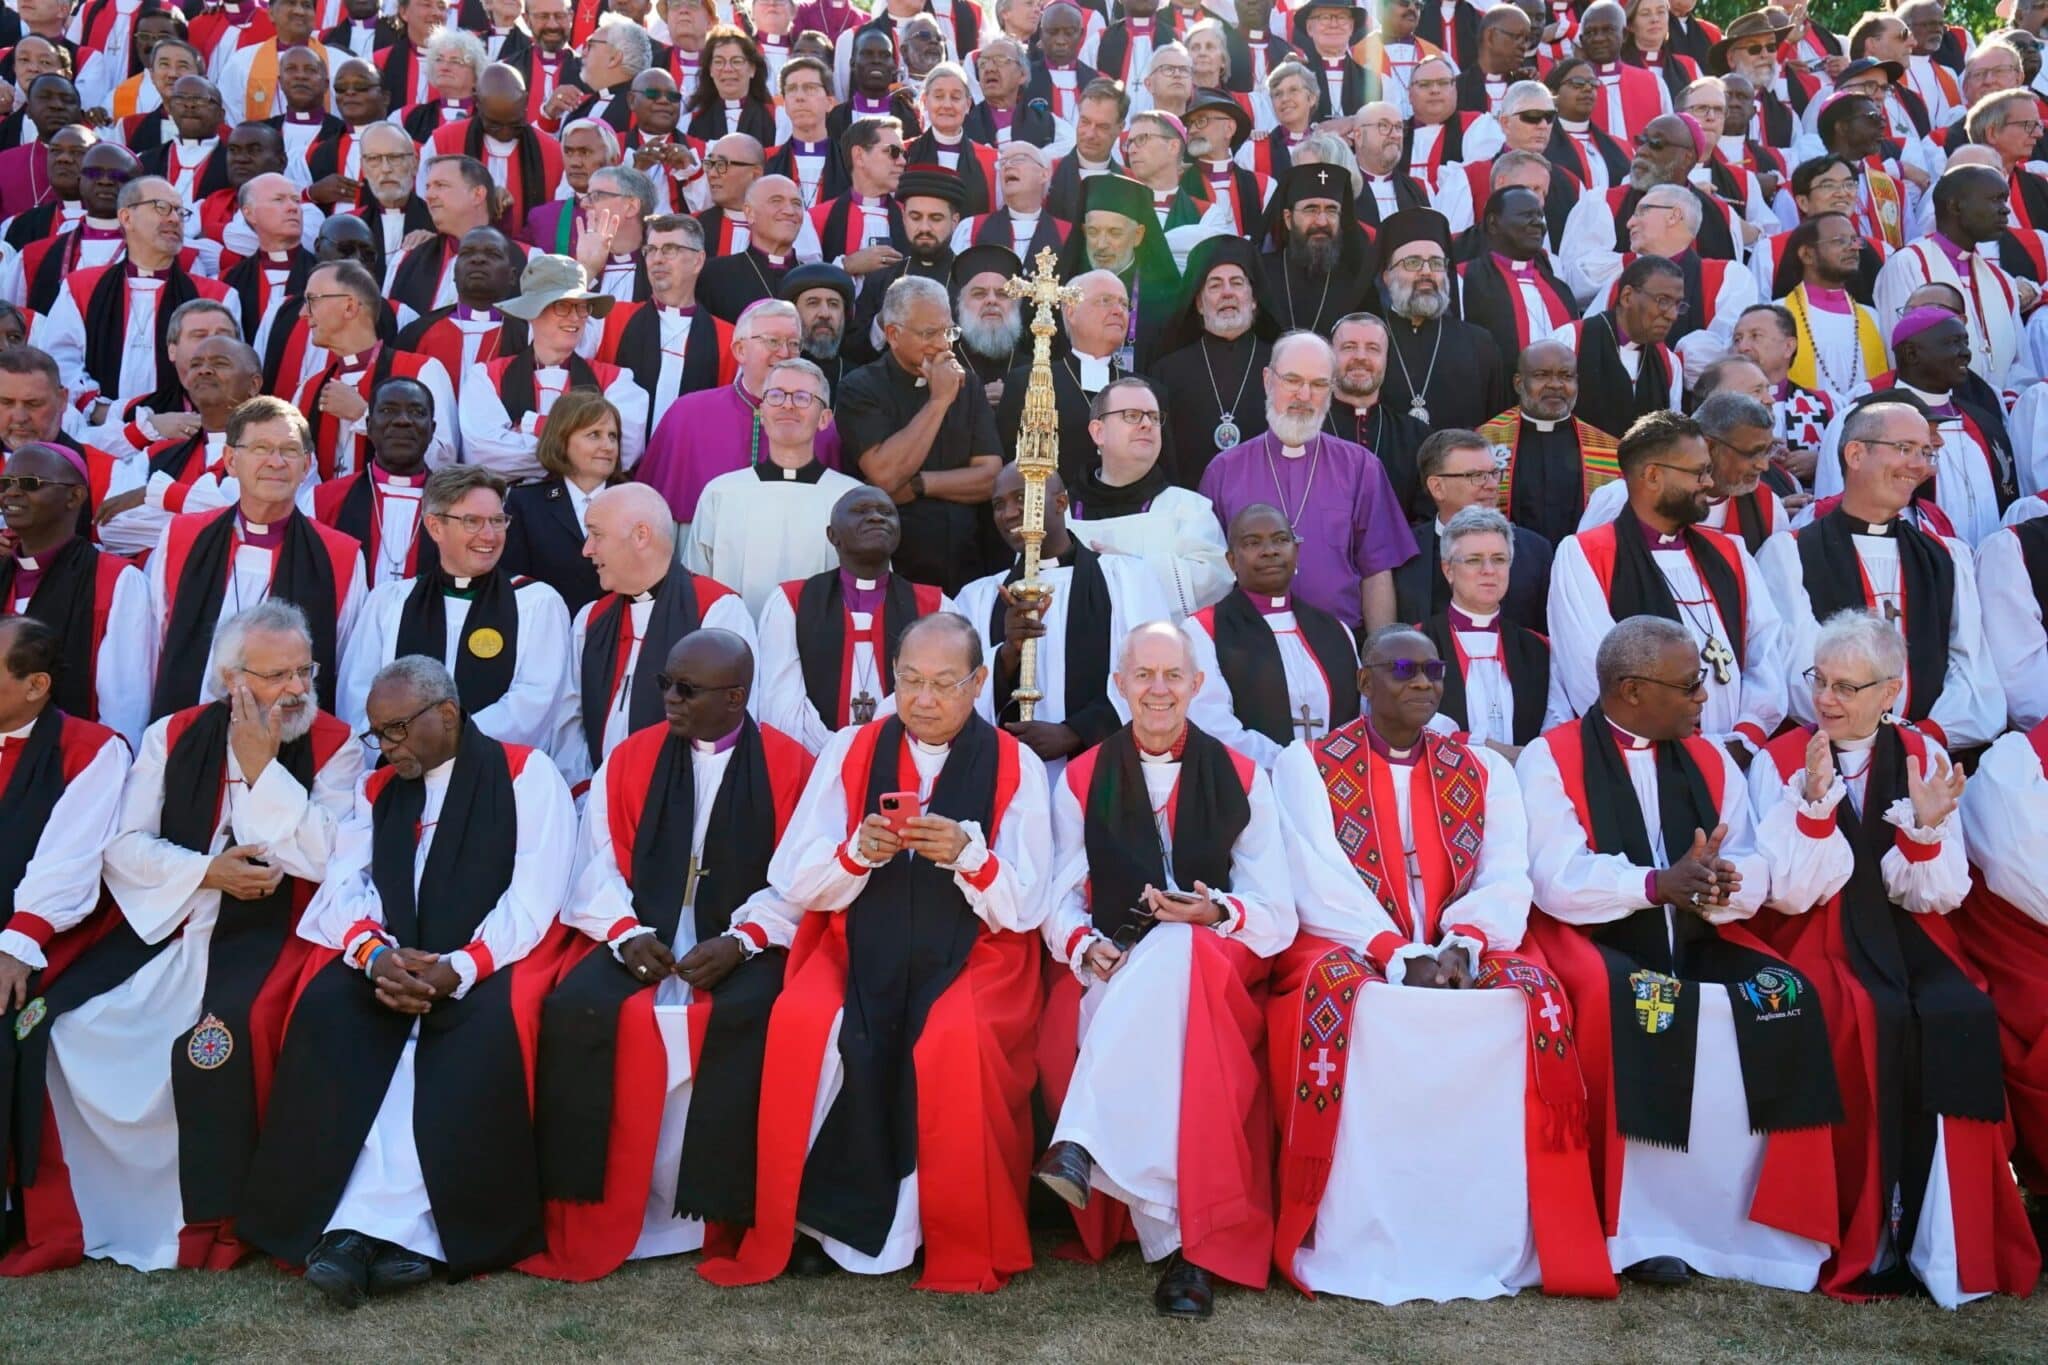 anglican bishops